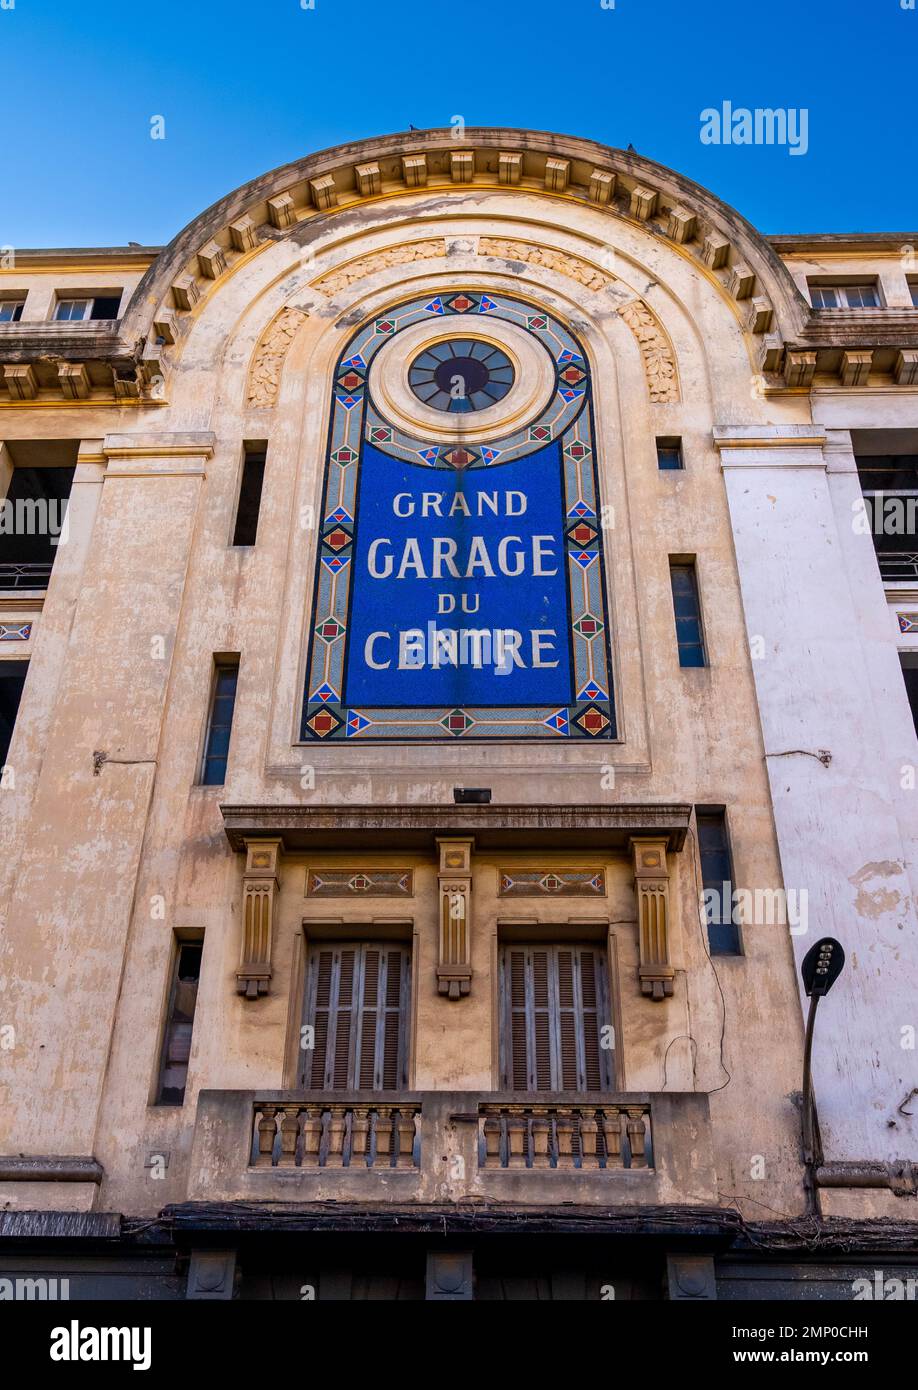 Grand garage du centre, North Africa, Oran, Algeria Stock Photo